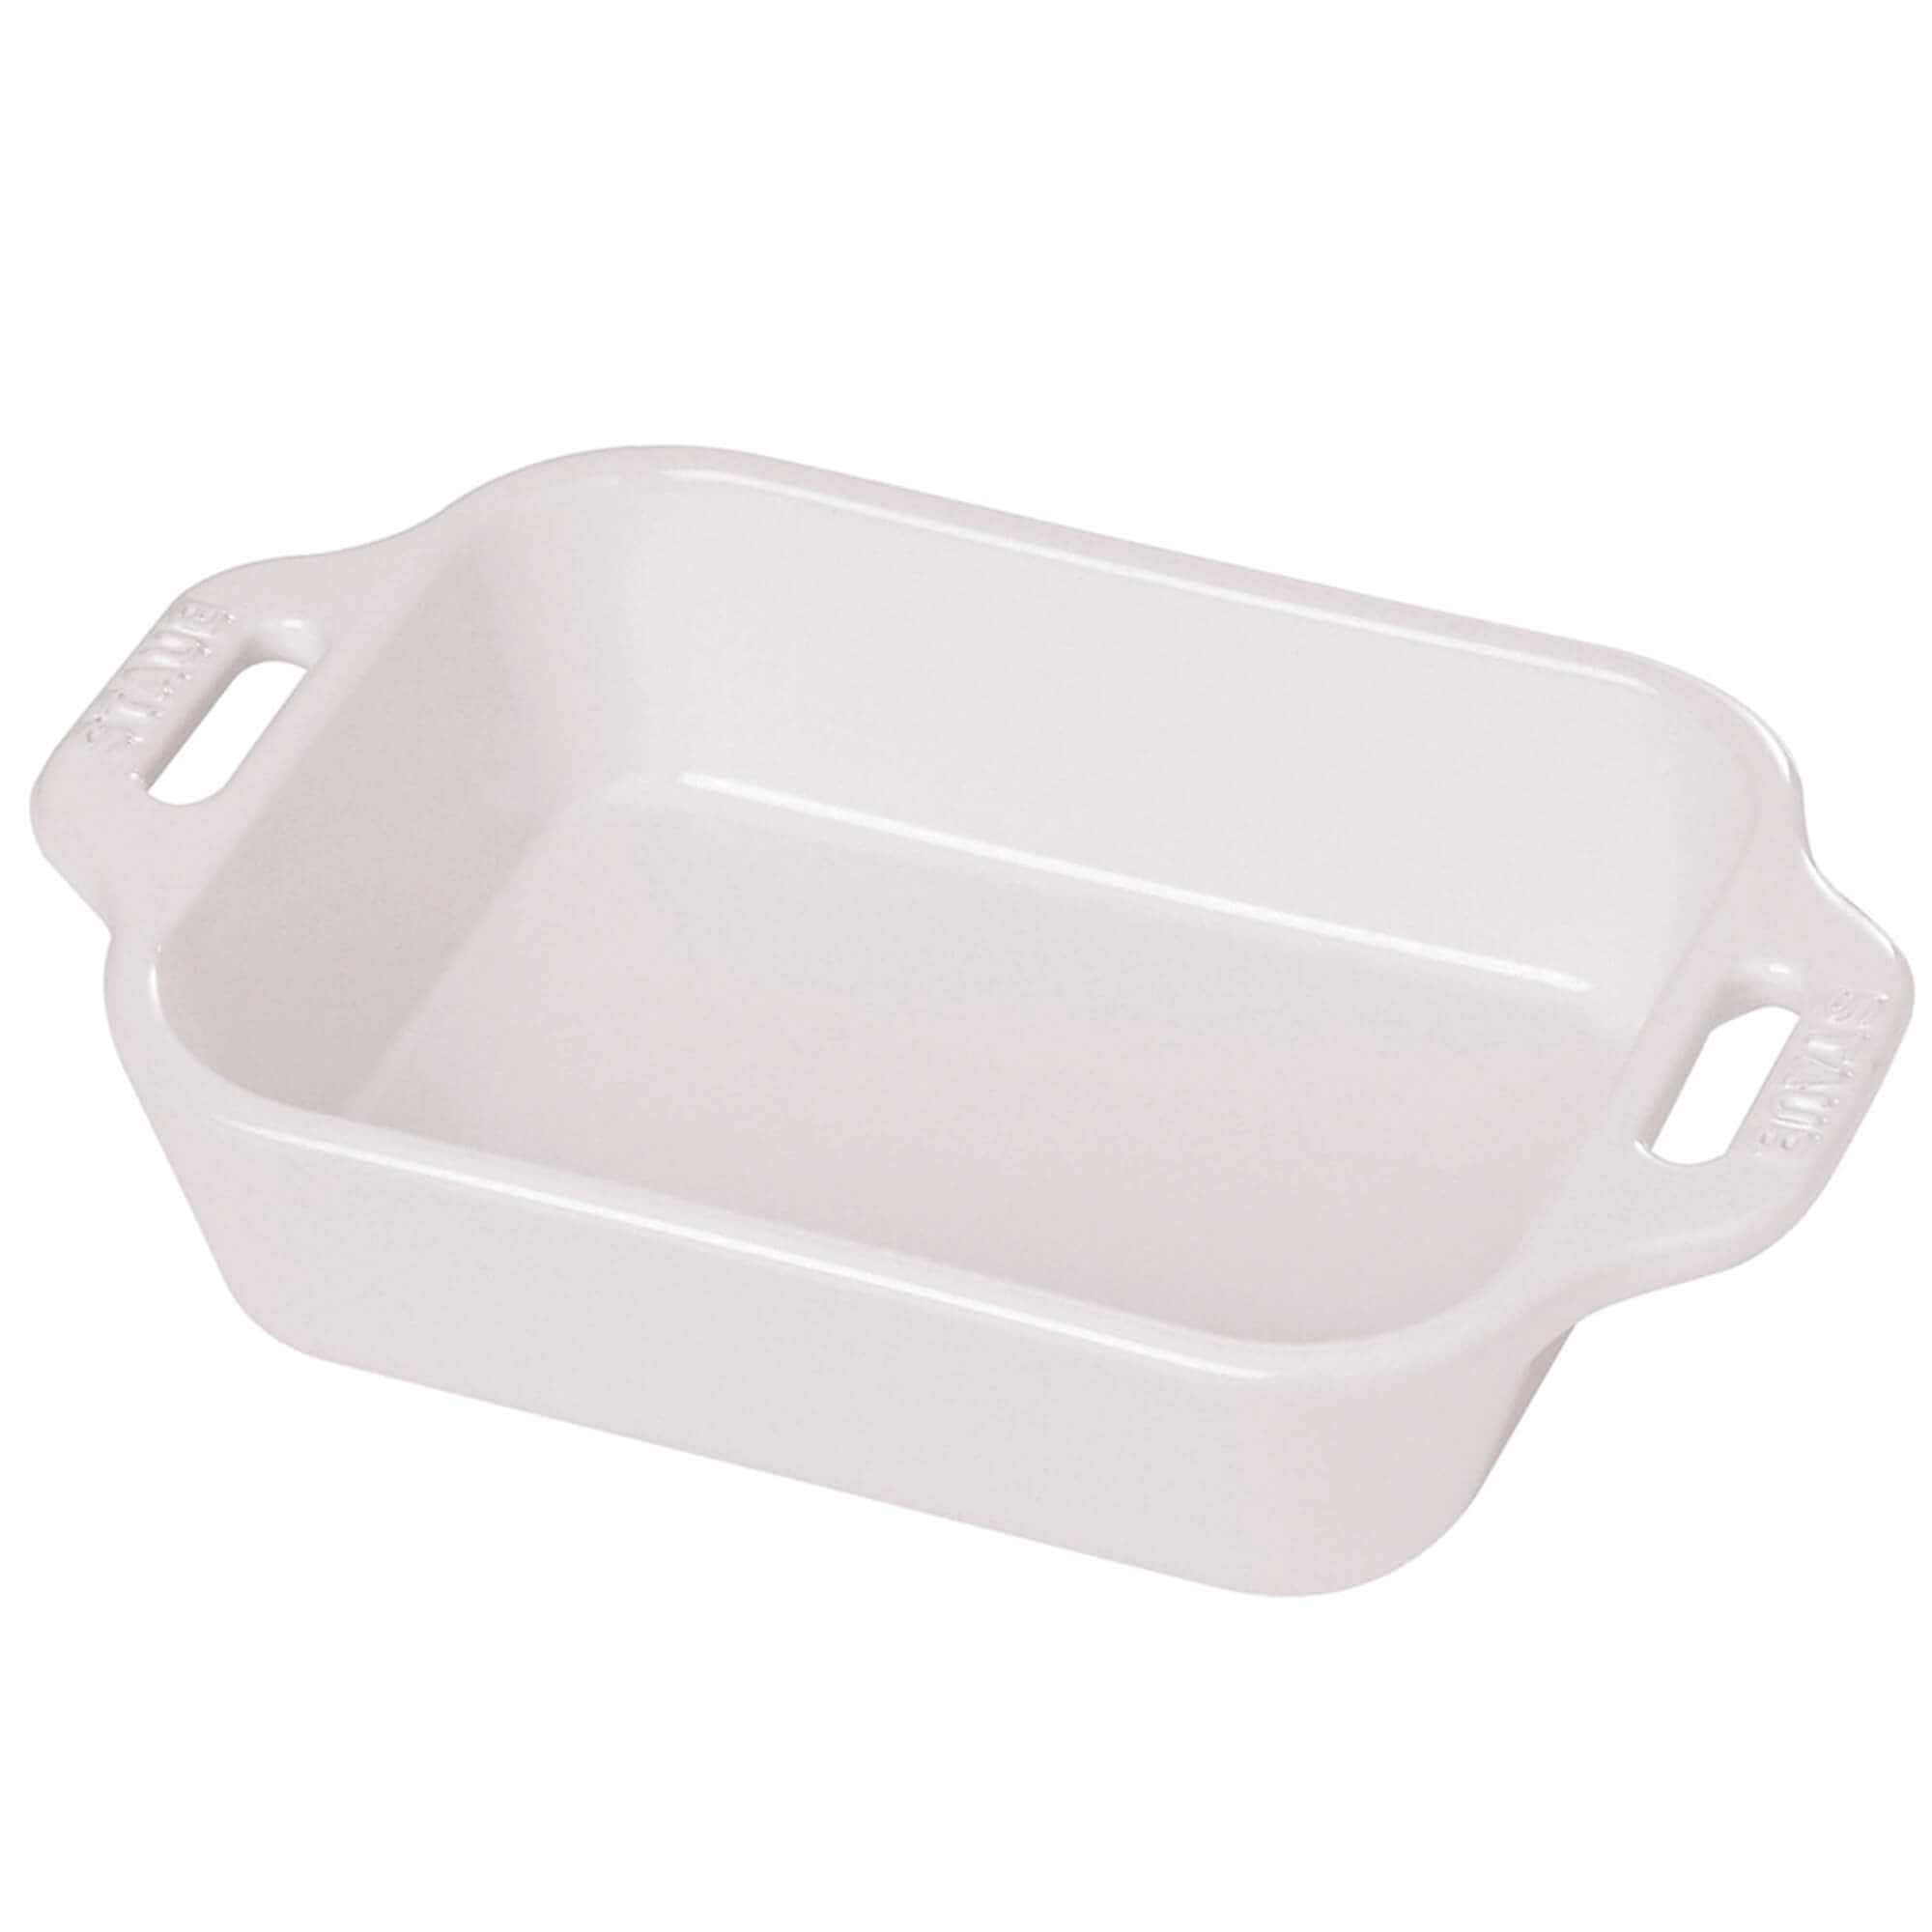 STAUB Ceramic 13-inch x 9-inch Rectangular Baking Dish - Bed Bath & Beyond  - 14769605